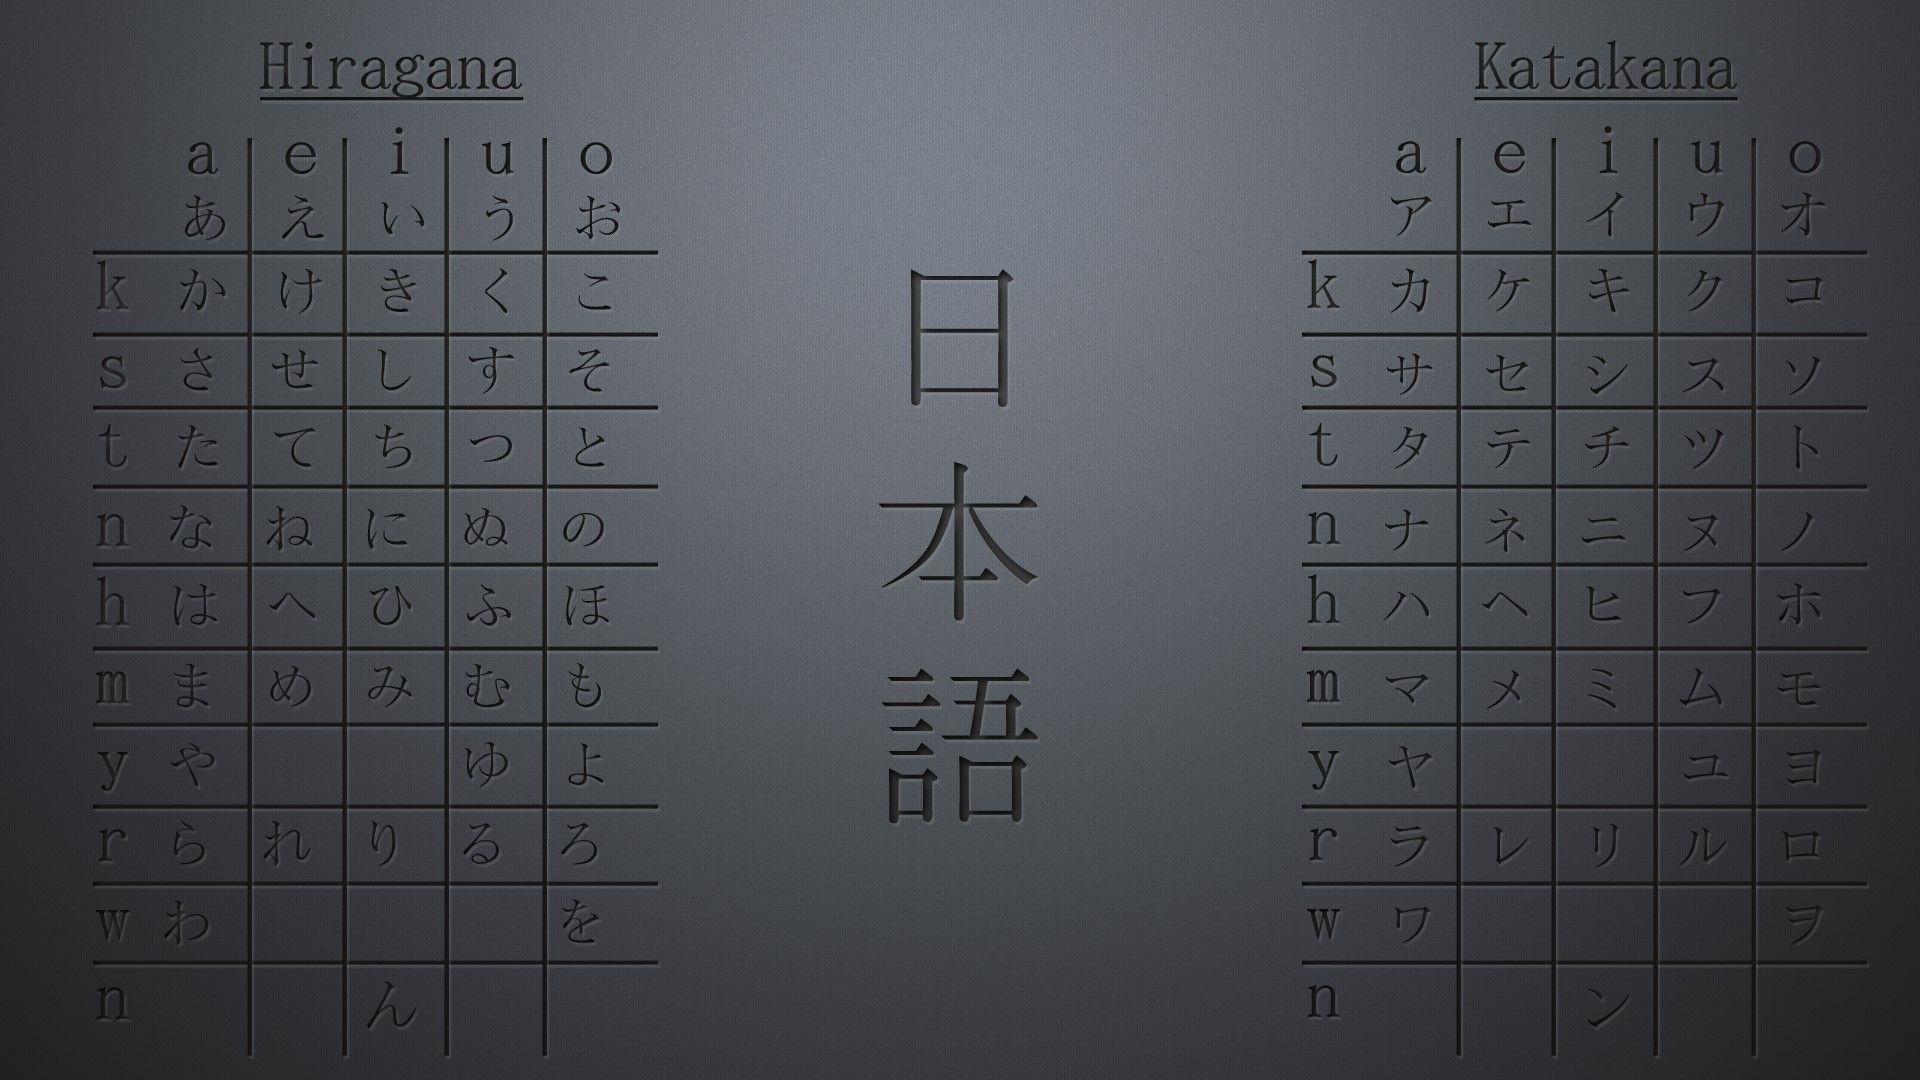 hiragana katakana kana wallpaper and background